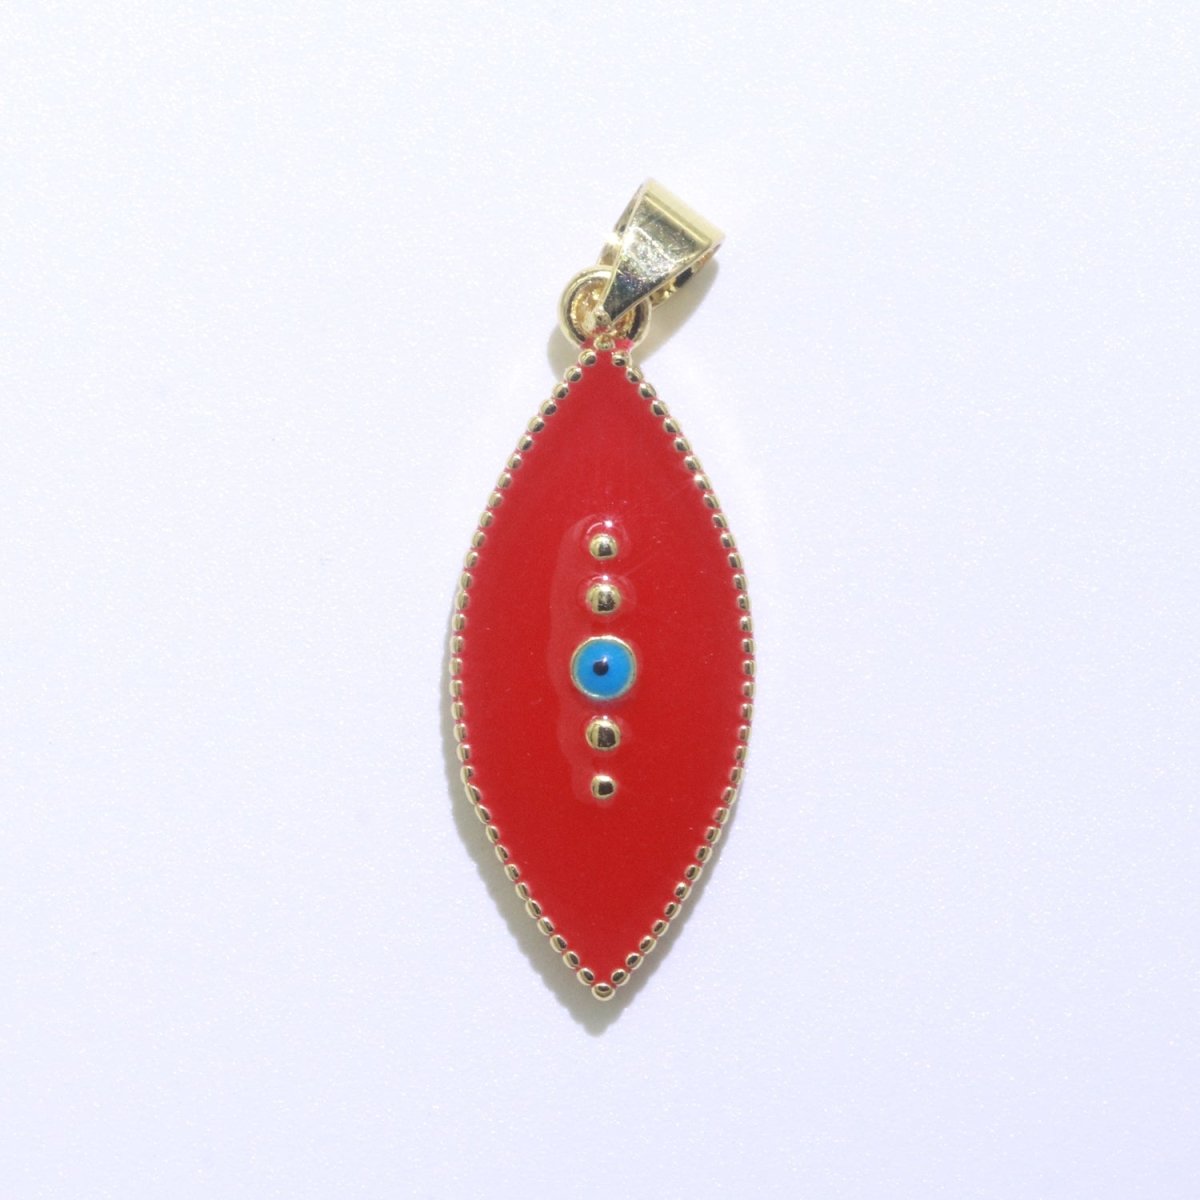 Enamel Evil Eye Charm Red Black White Charm Gold Pendant for Necklace Earring Supply Component in 14k Gold Filled J-857~J-859 - DLUXCA